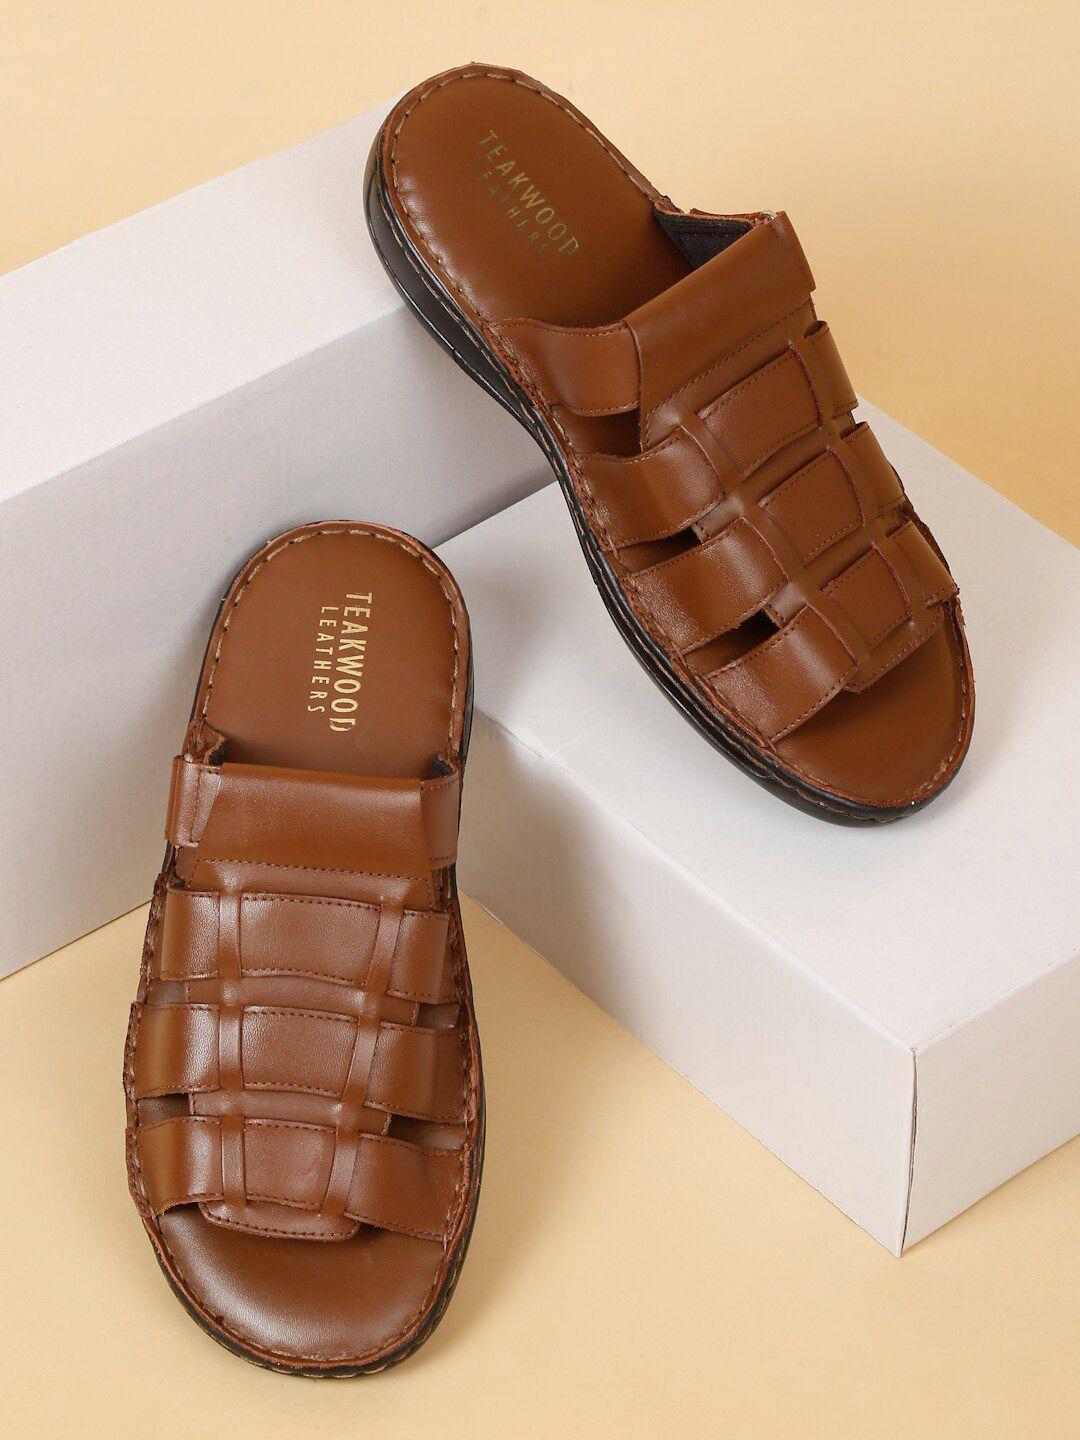 teakwood leathers men open toe leather comfort sandals